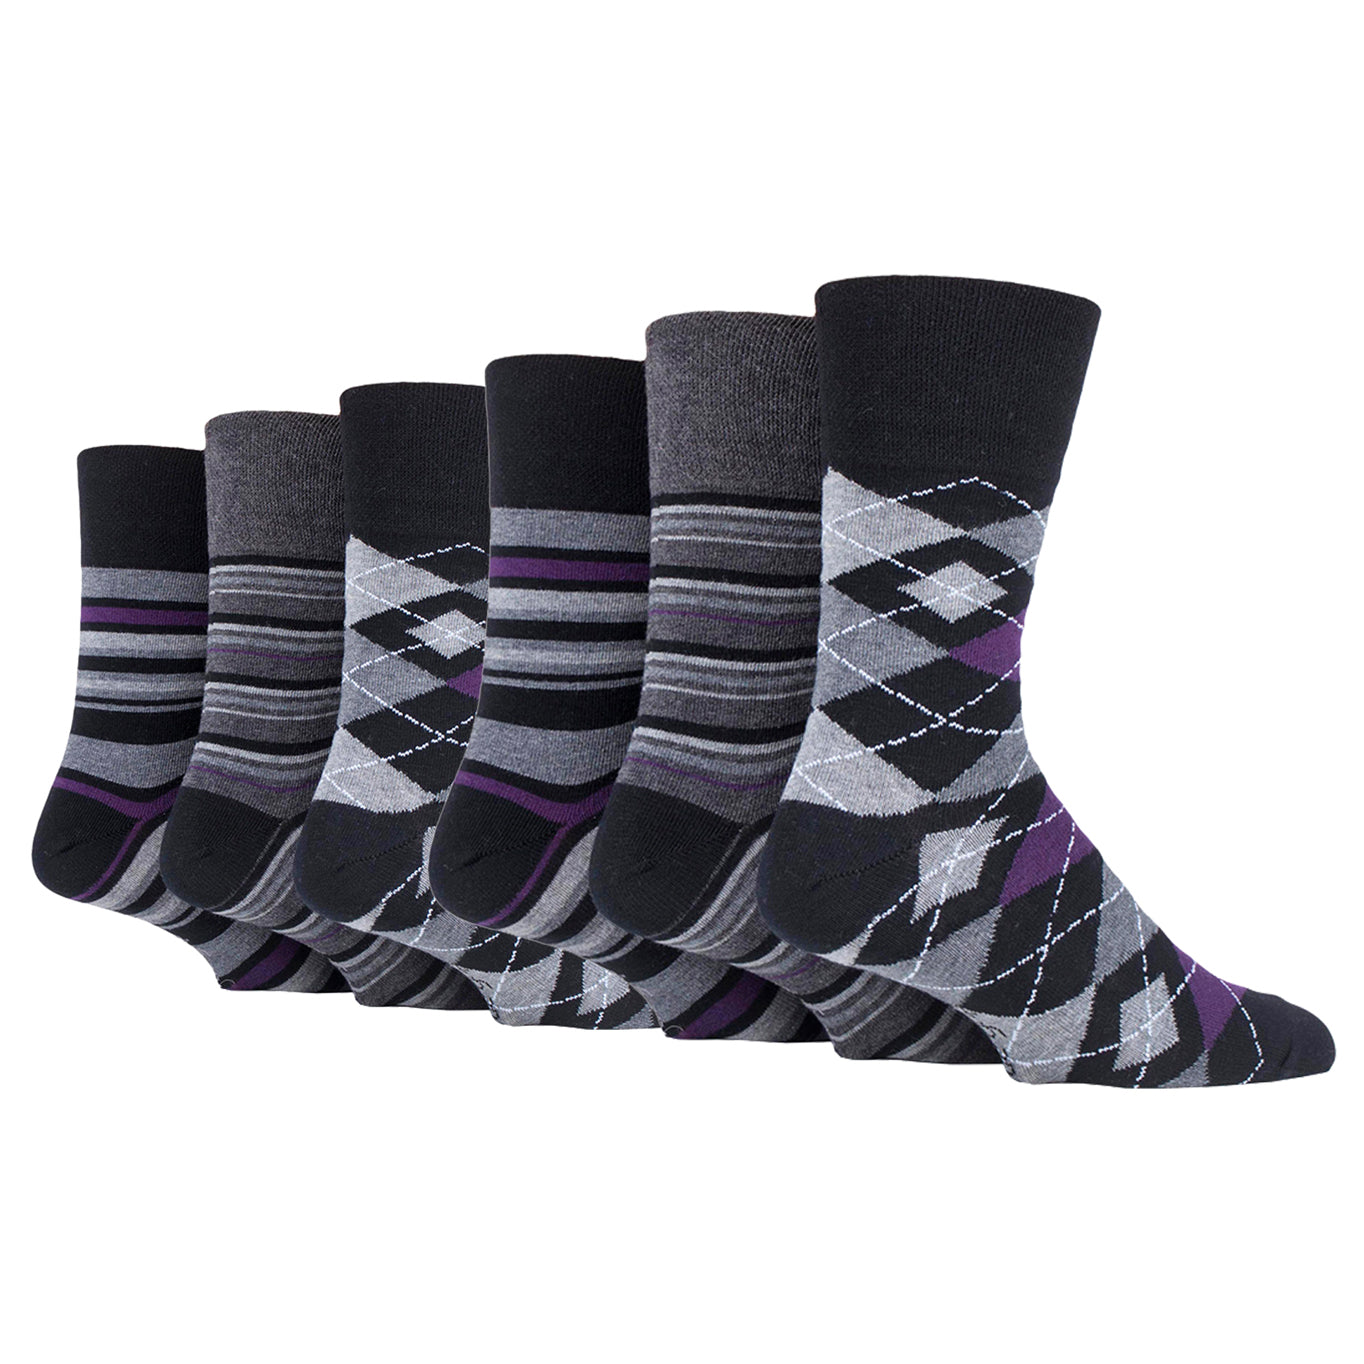 6 Pairs Men's Gentle Grip Cotton Socks Argyle Formality Black/Charcoal